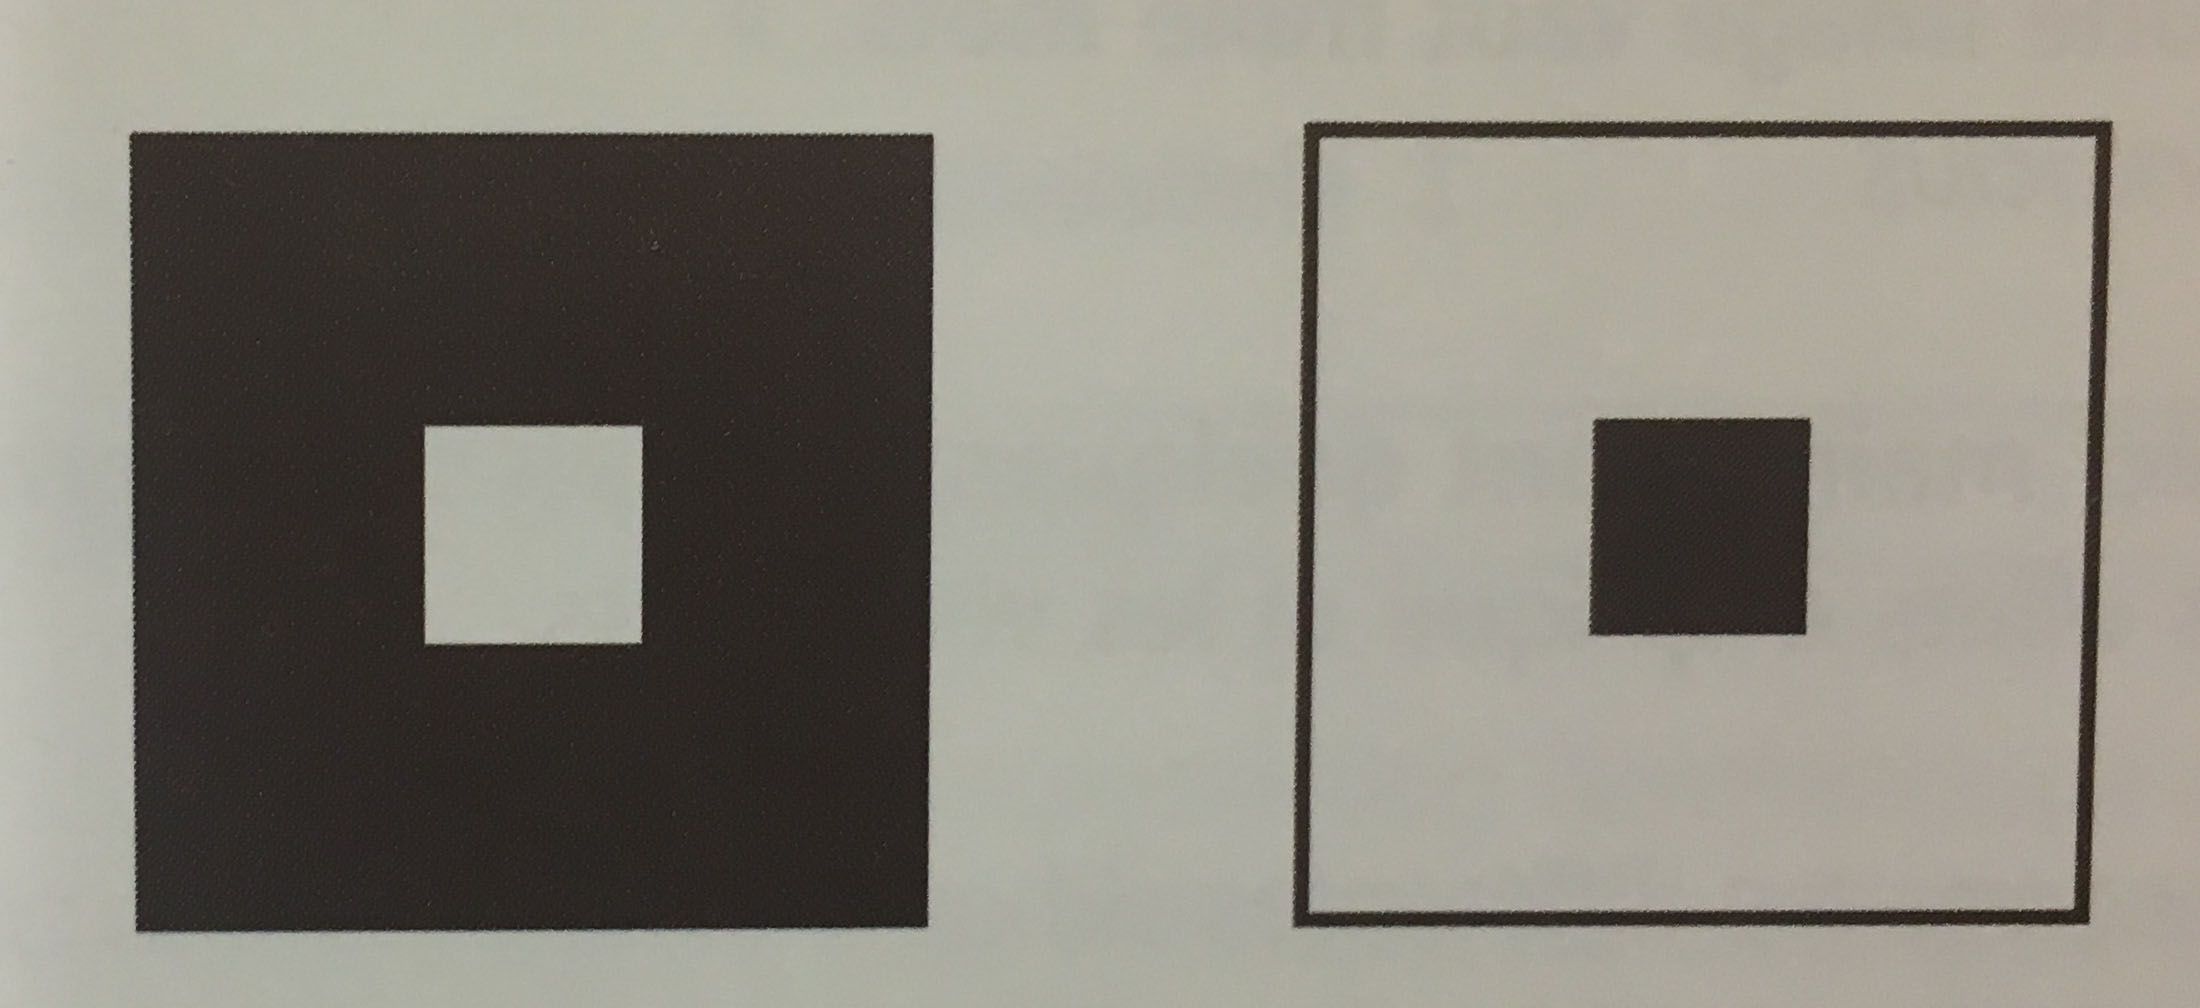 Taille carré blanc vs noir.jpg